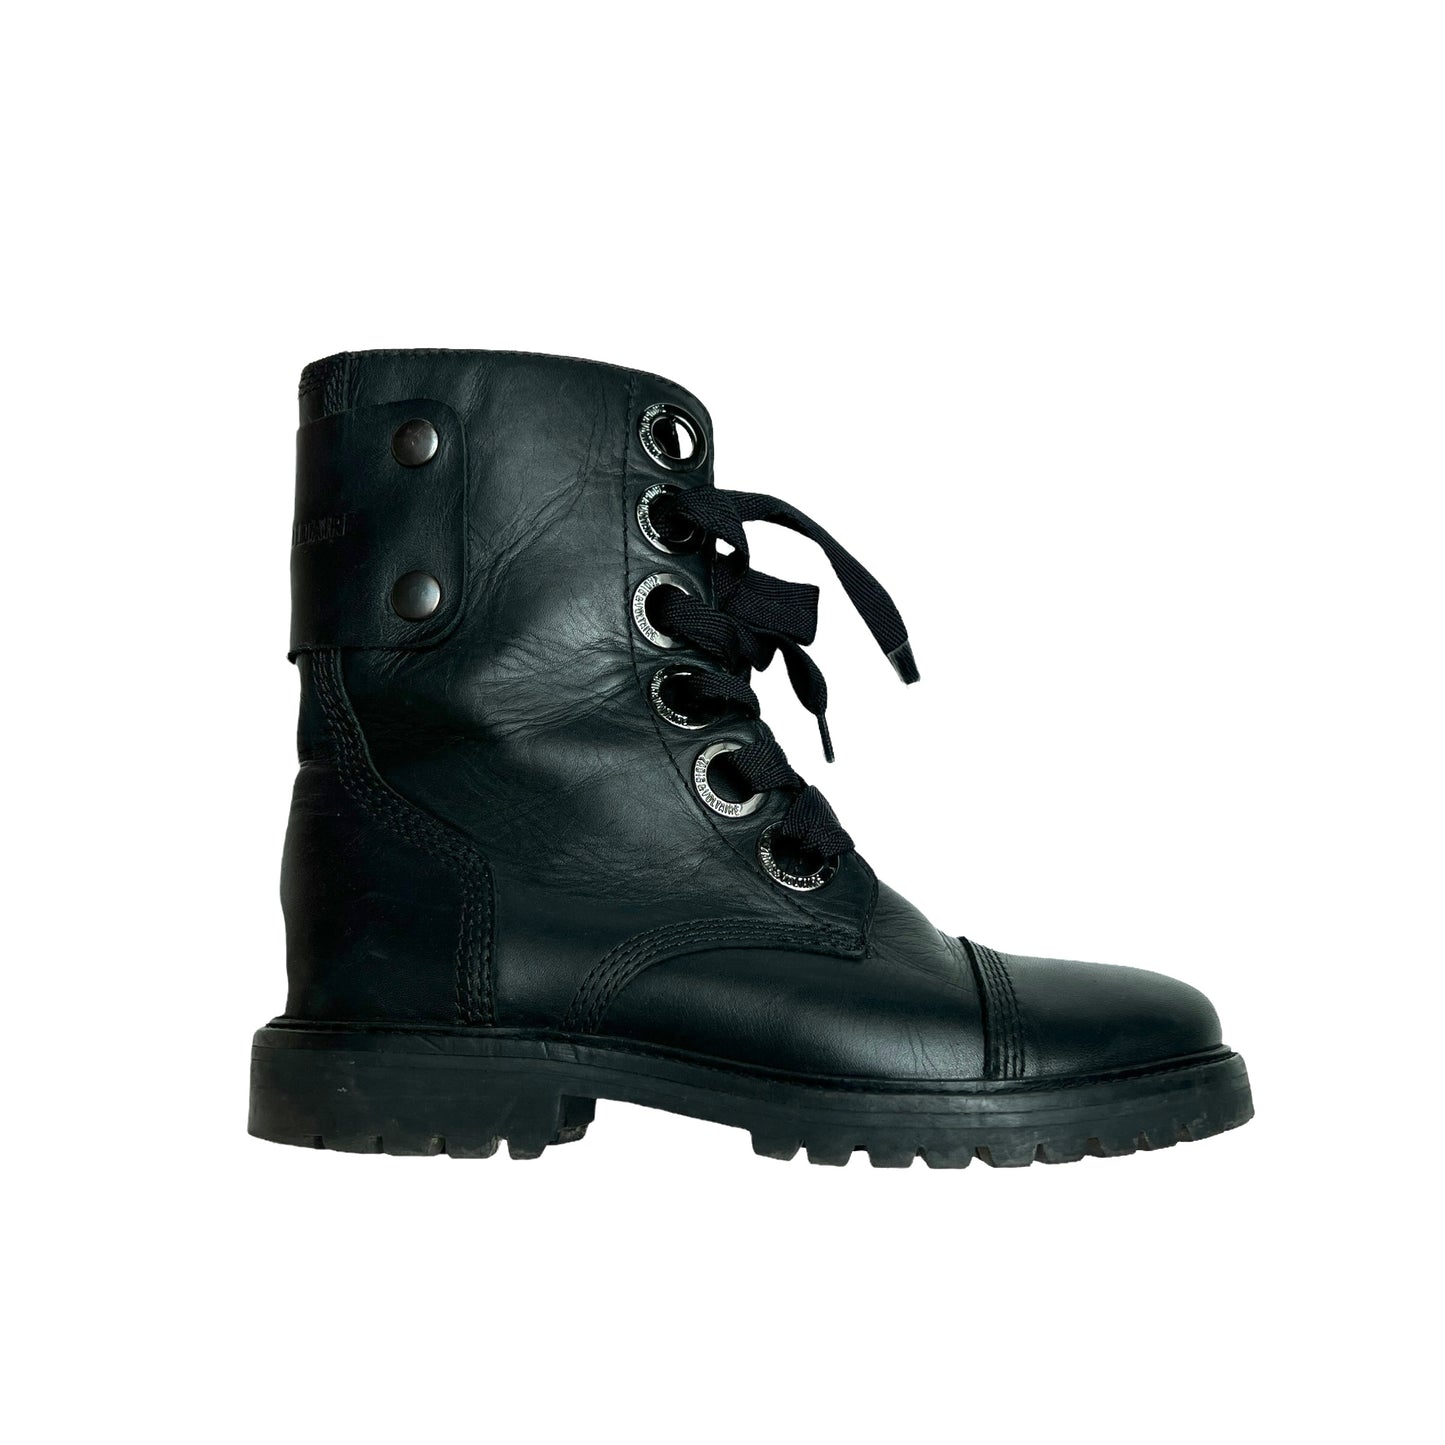 Black Combat Leather Boots - 7